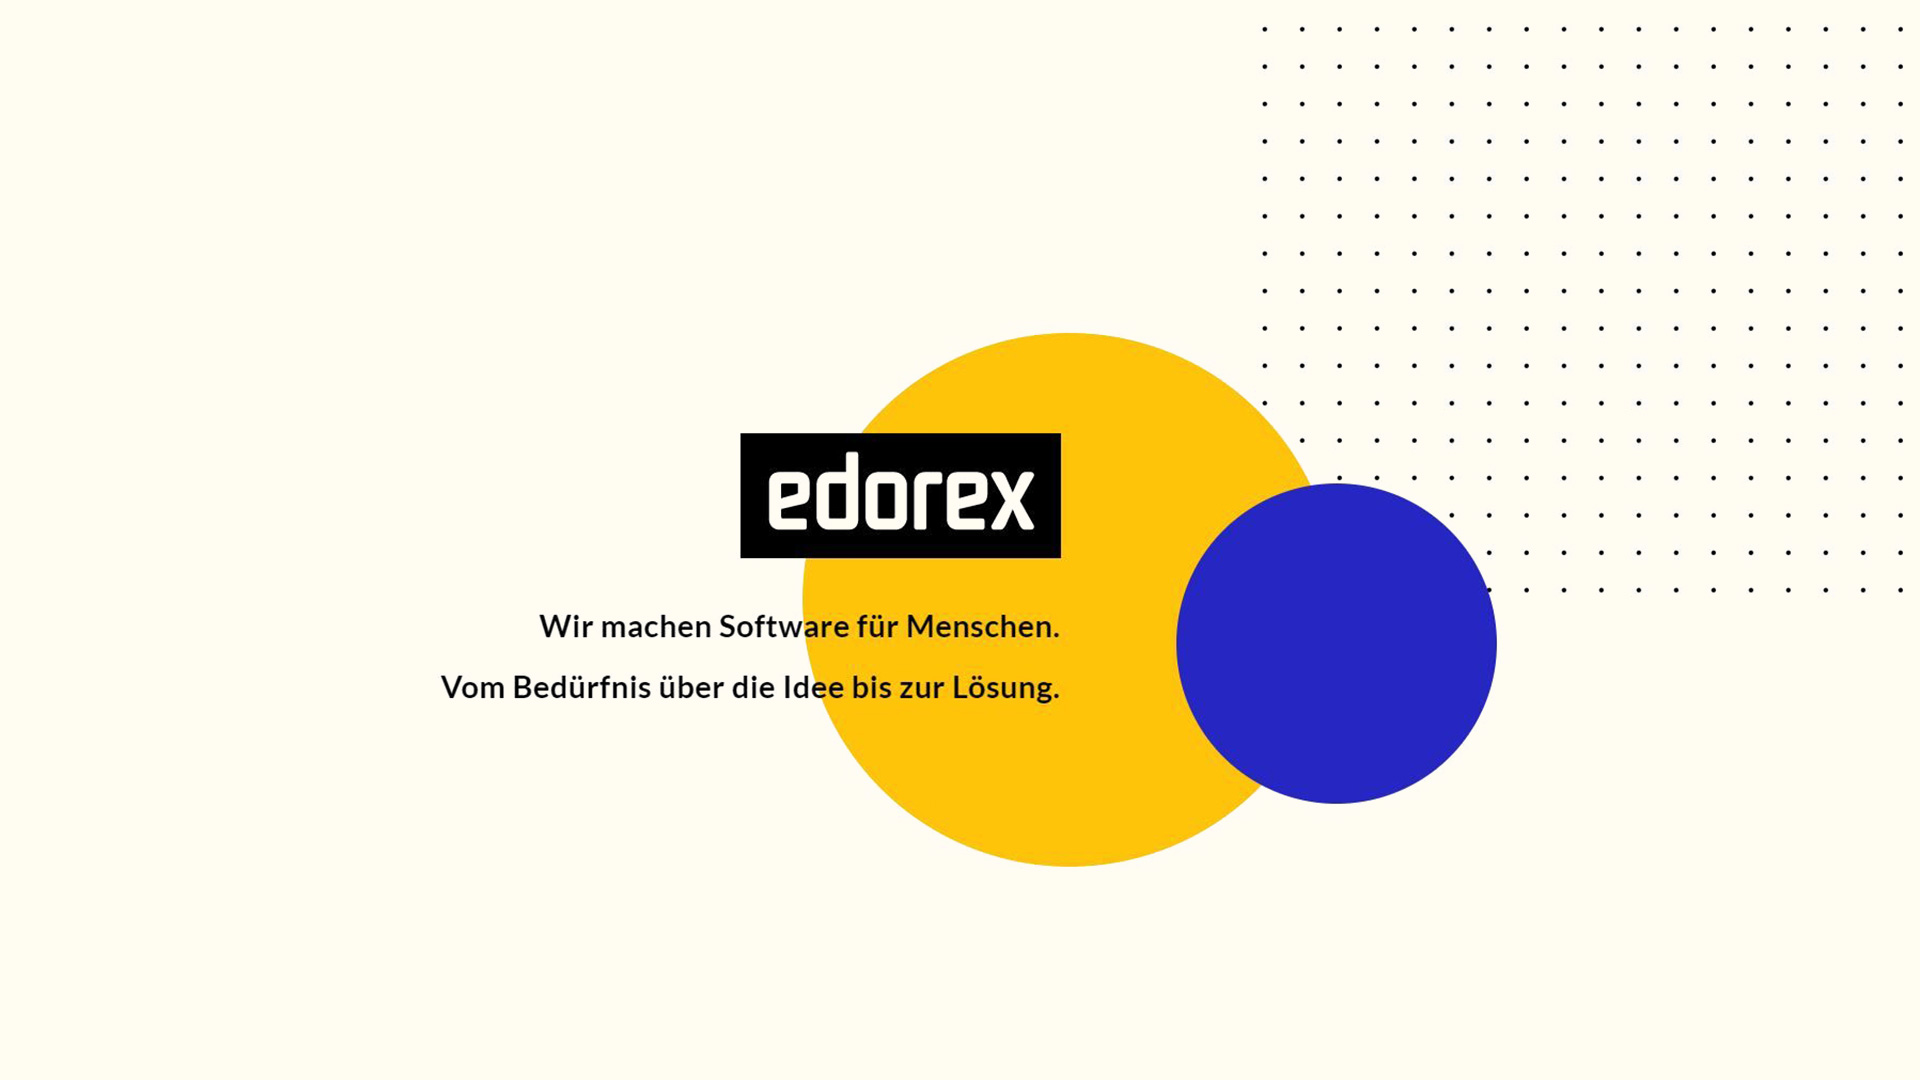 Edorex AG: SEO-Beratung und Coaching